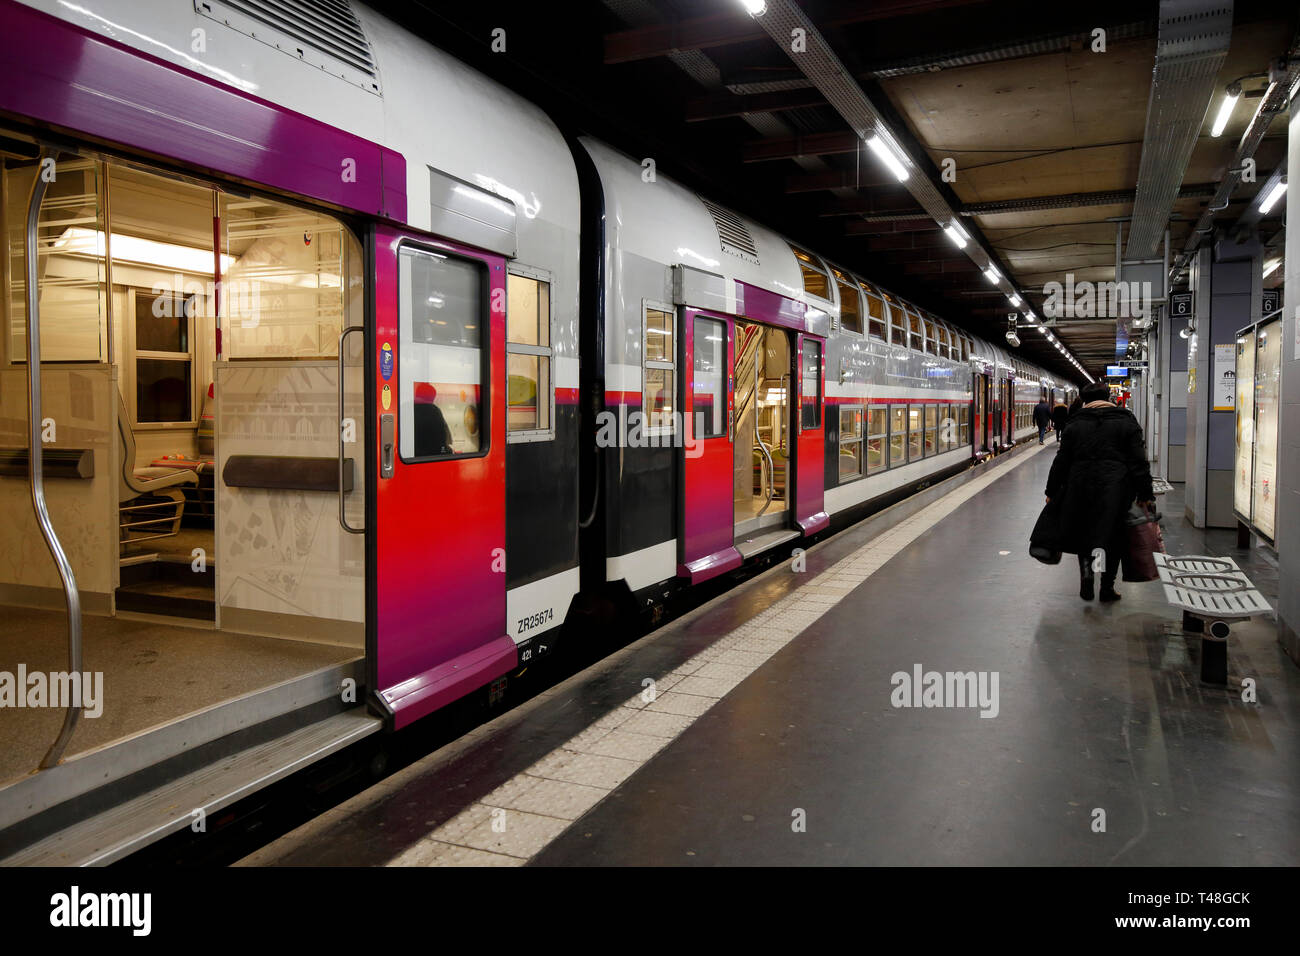 A SCNF Transilien suburban train at Paris RER station 'Invalide', Paris, France Stock Photo